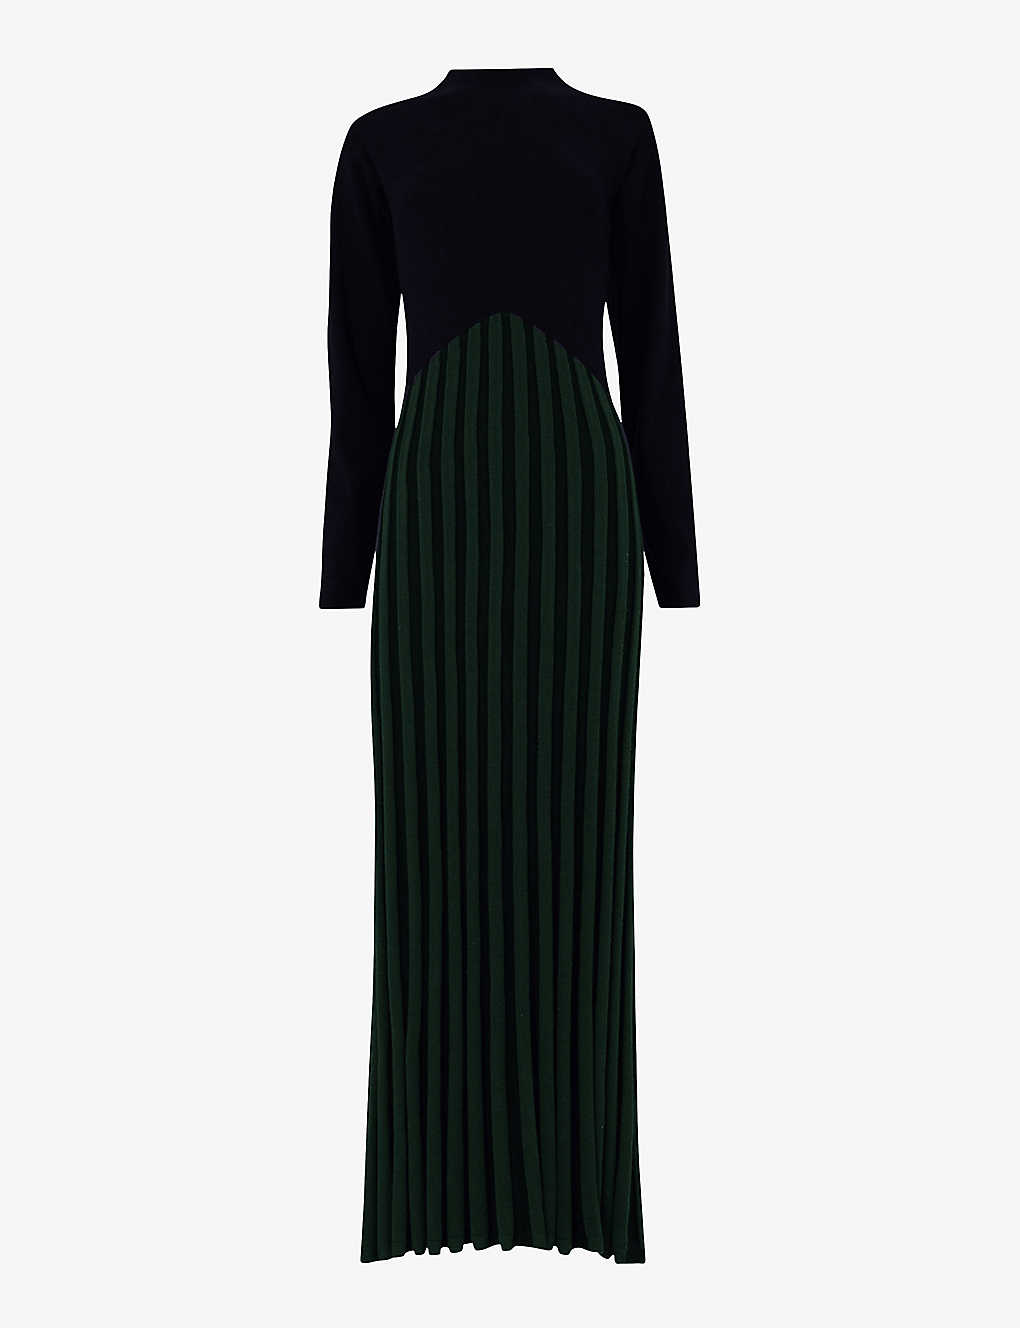 Leem Long-sleeved Pleated-skirt Knitted Maxi Dress In Black/gree